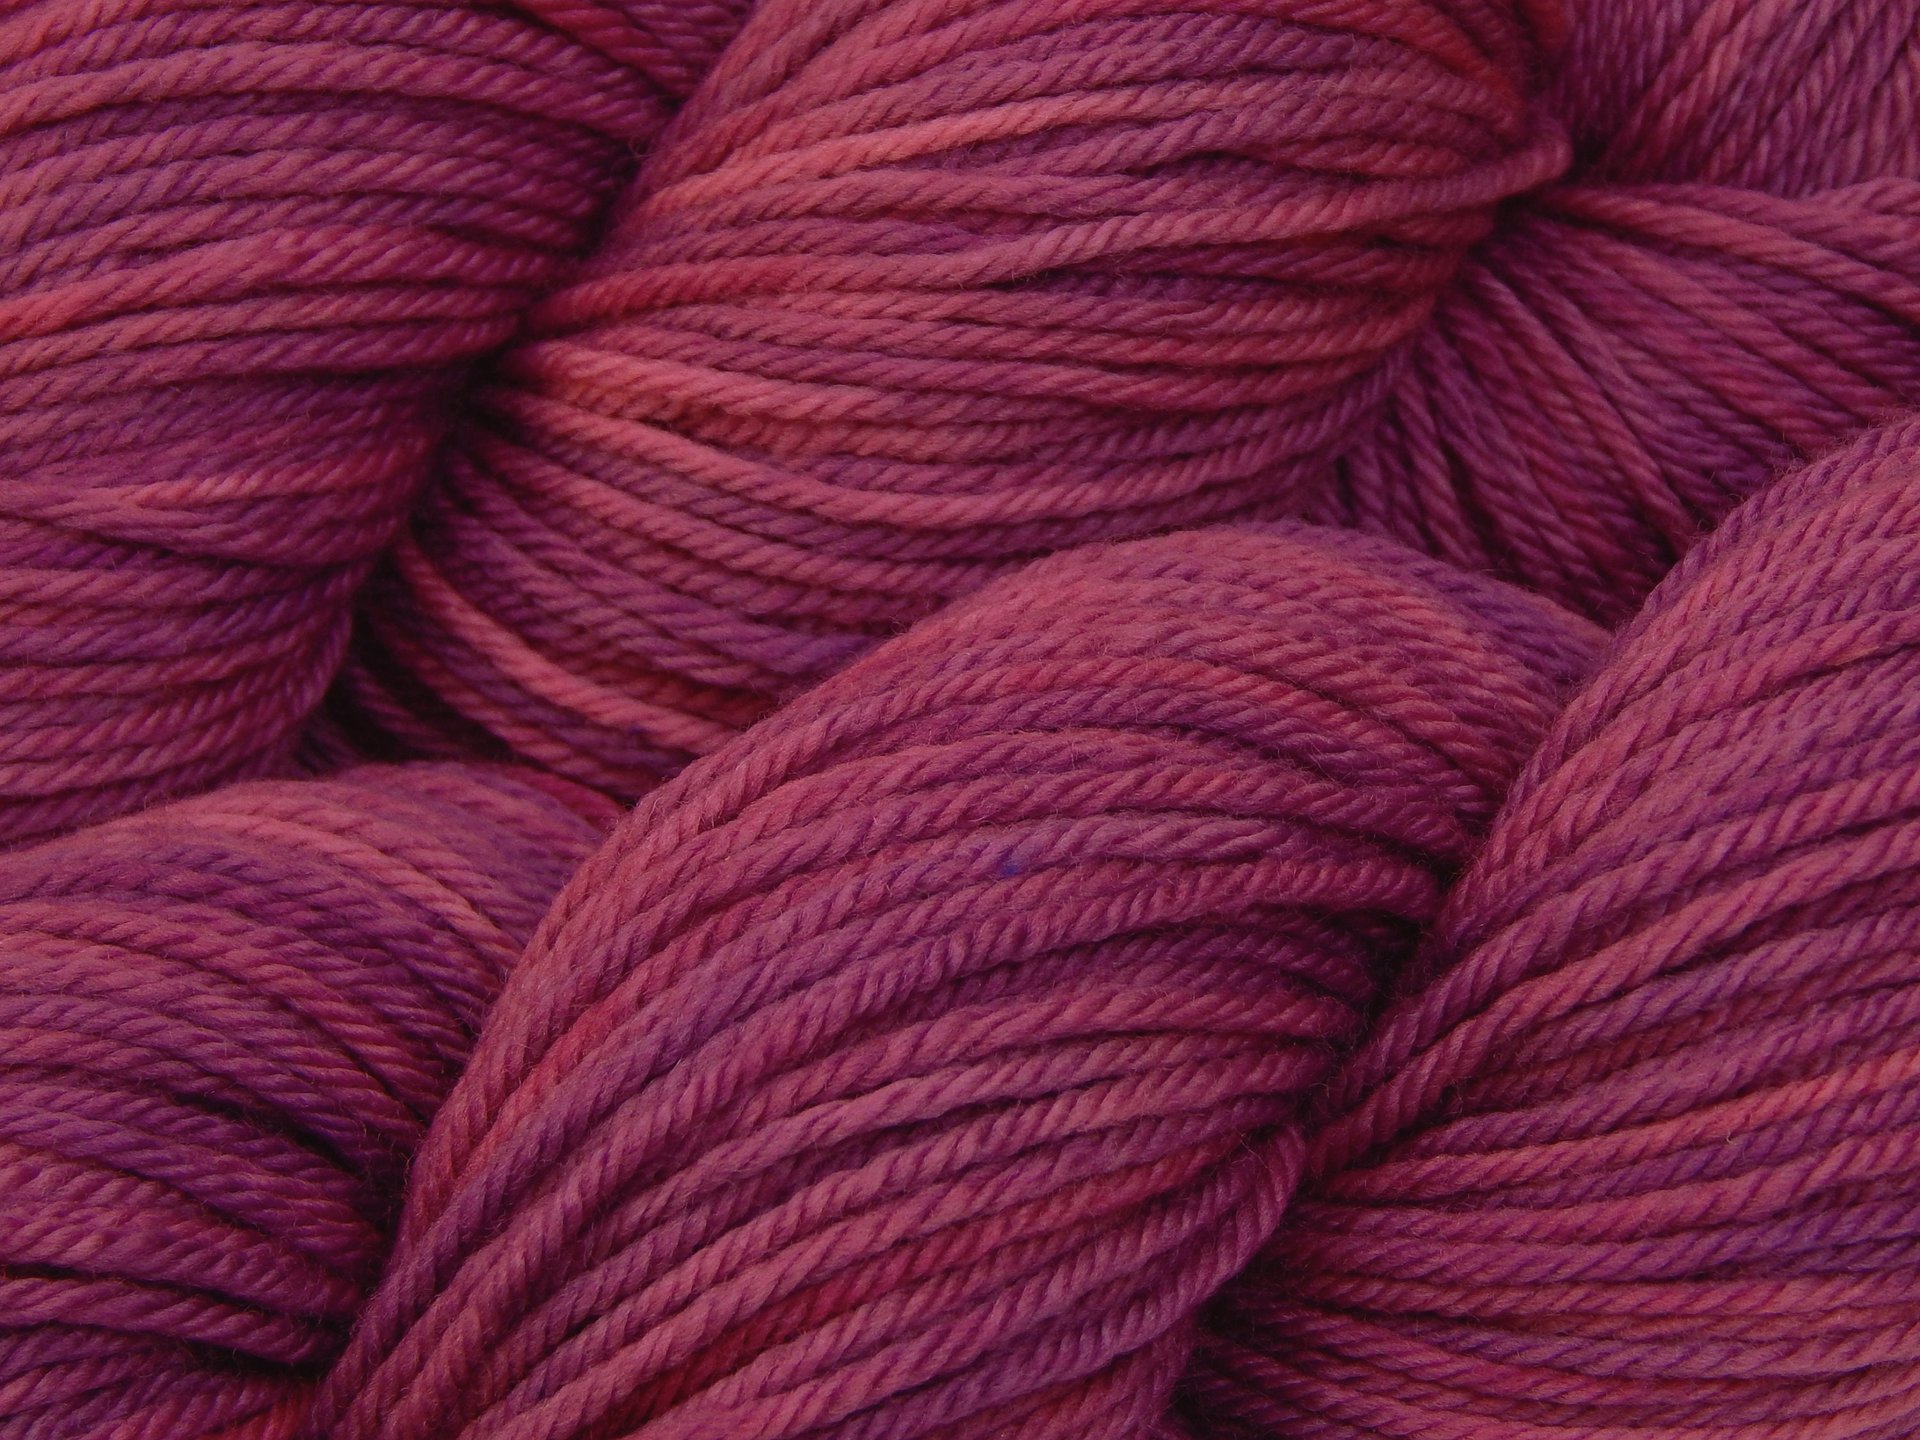 Hand Dyed Yarn, Worsted Weight Superwash Merino Wool - Orchid - Tonal Purplish Magenta Indie Dyer Yarn, Fuchsia Semi Solid Knitting Yarn